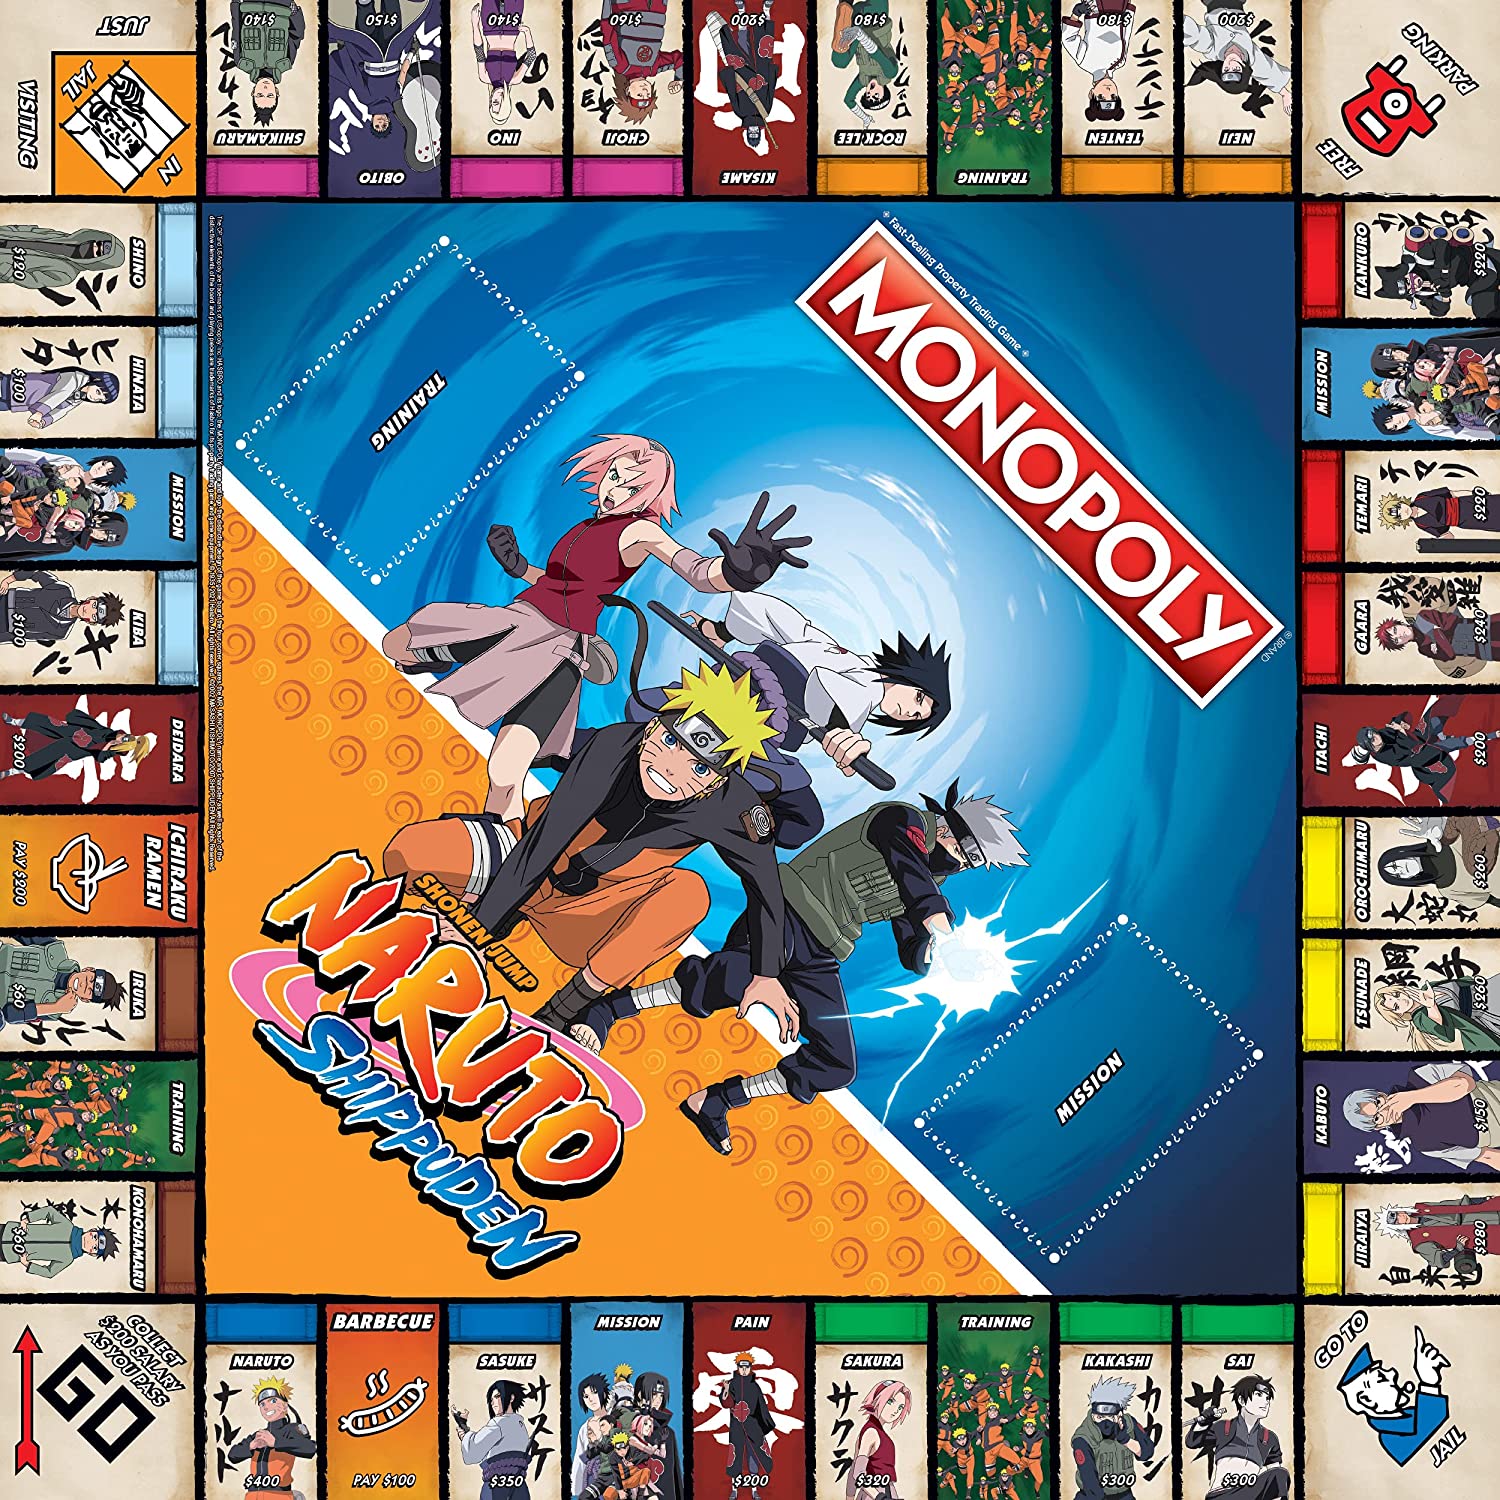 Monopoly - Naruto Shippudden